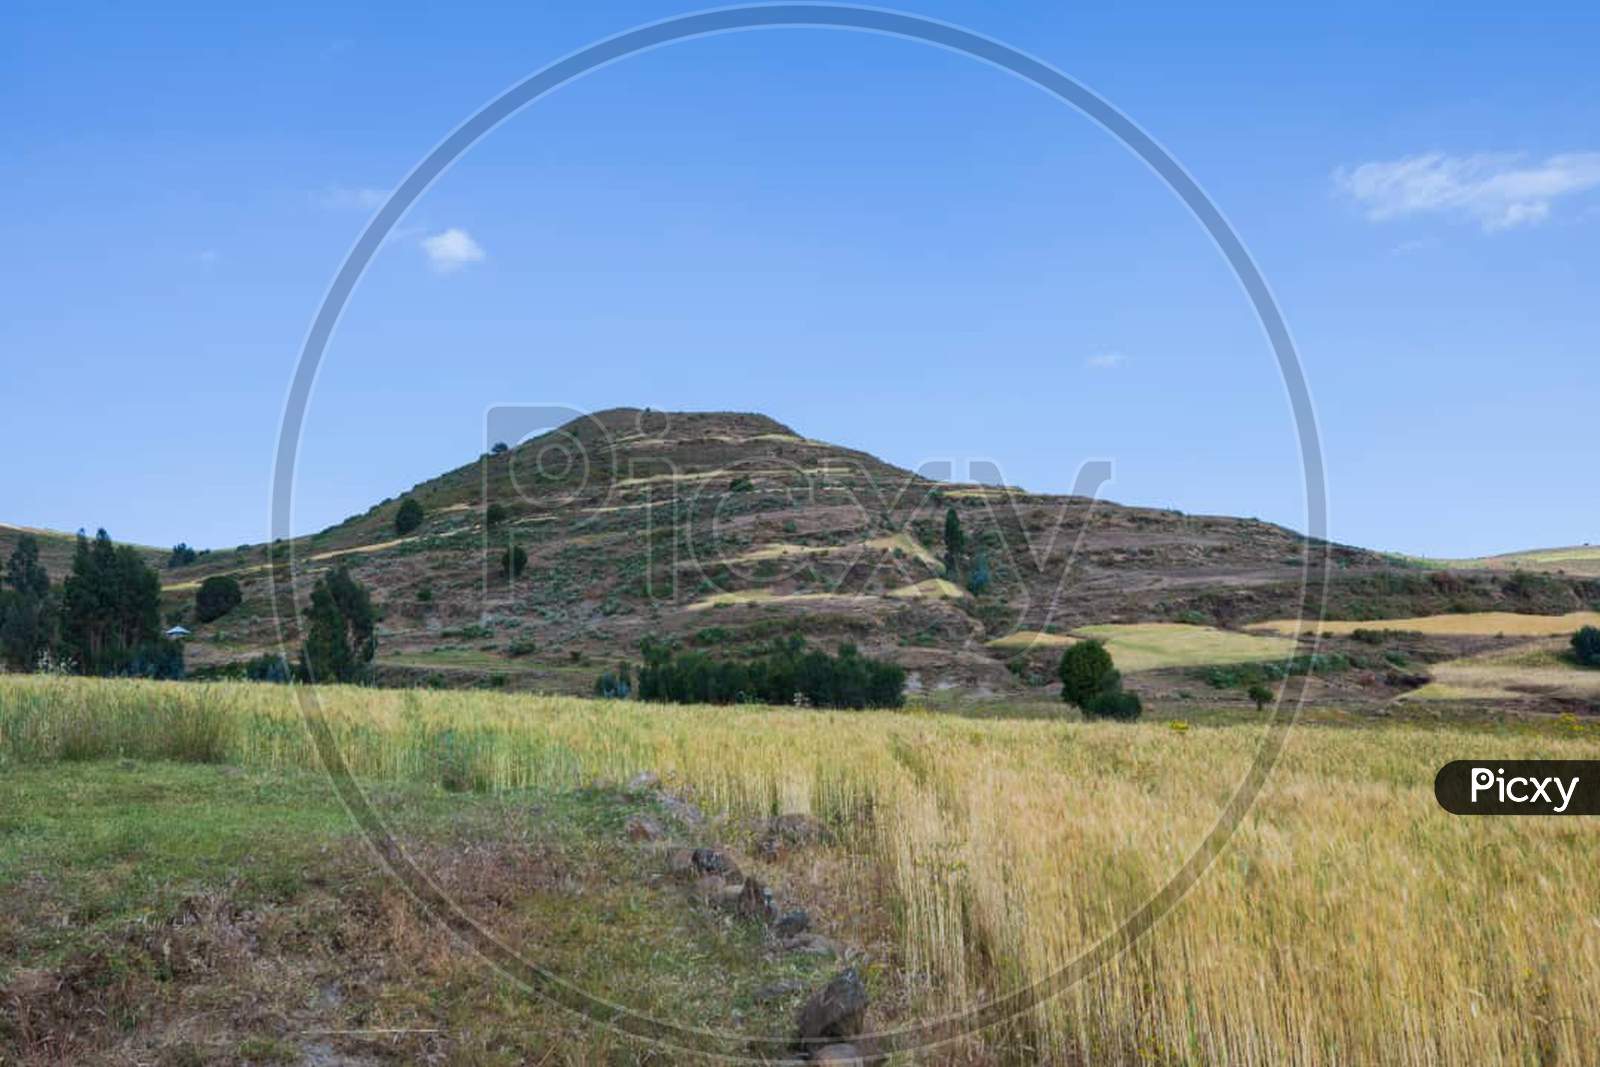 Hill on grass barley field